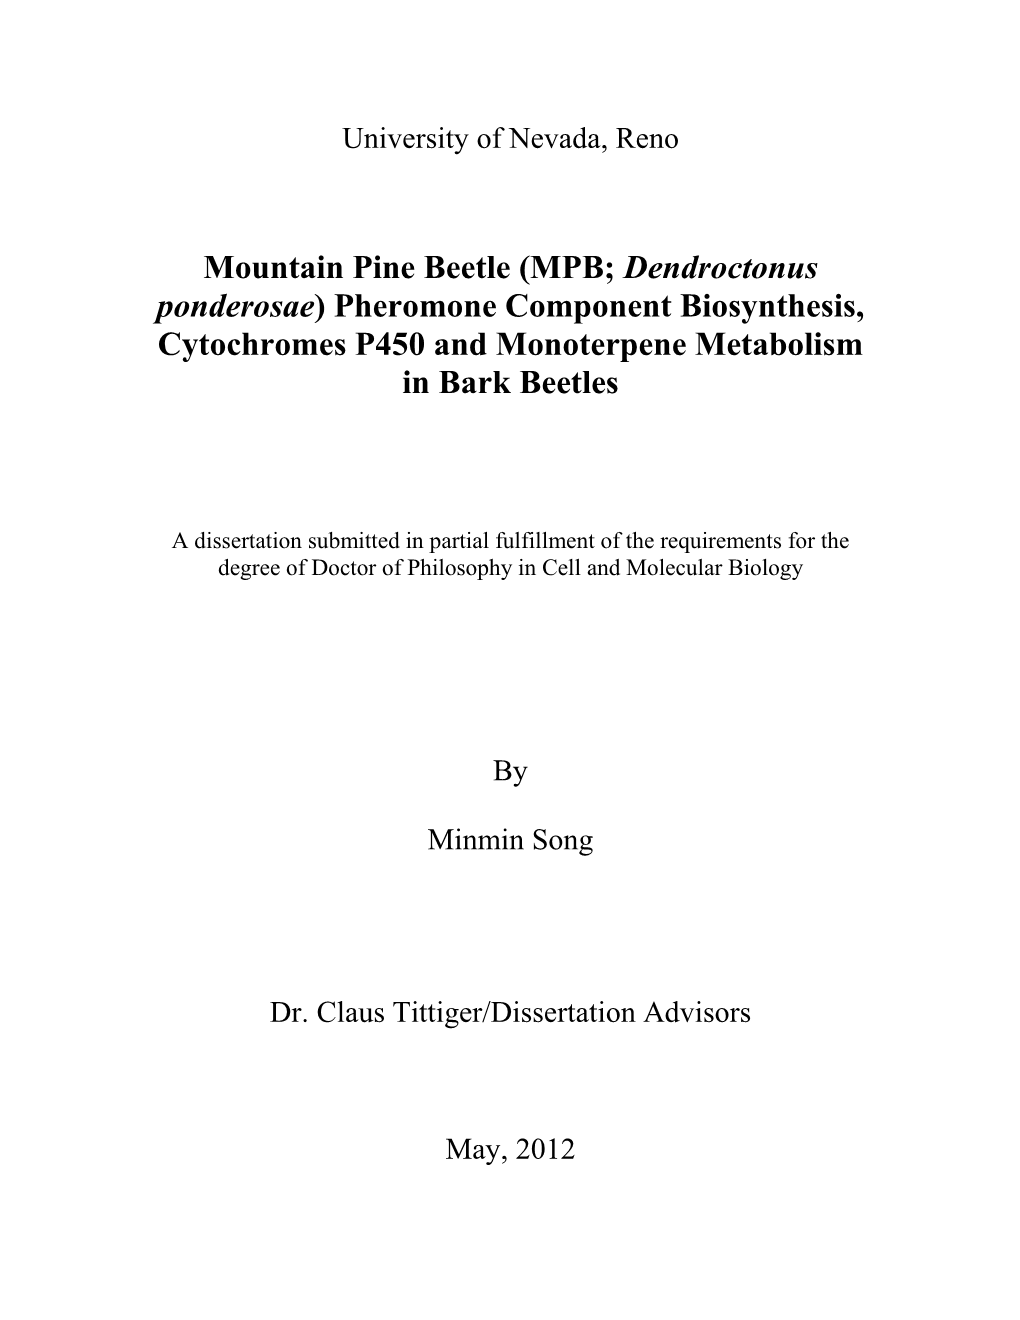 Mountain Pine Beetle (MPB; Dendroctonus Ponderosae) Pheromone Component Biosynthesis, Cytochromes P450 and Monoterpene Metabolism in Bark Beetles